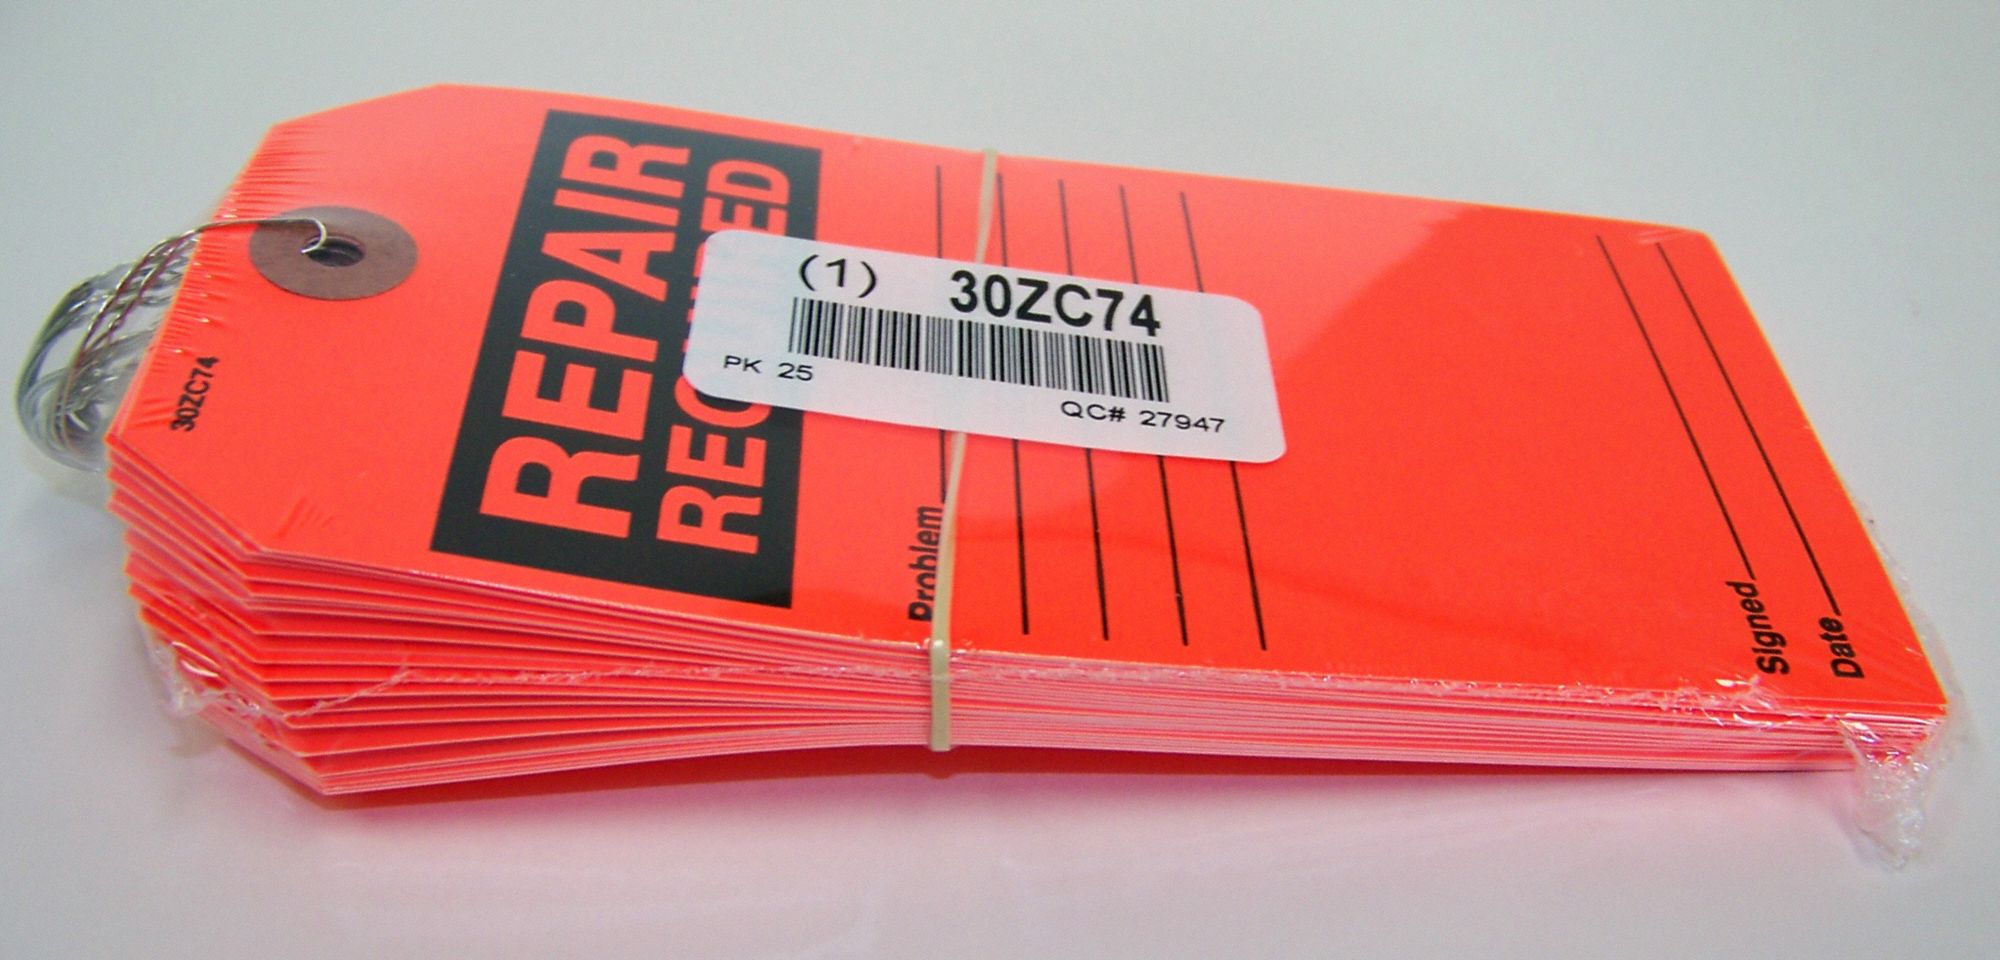 Blck/Red Repair Required Tag Paper PK25 